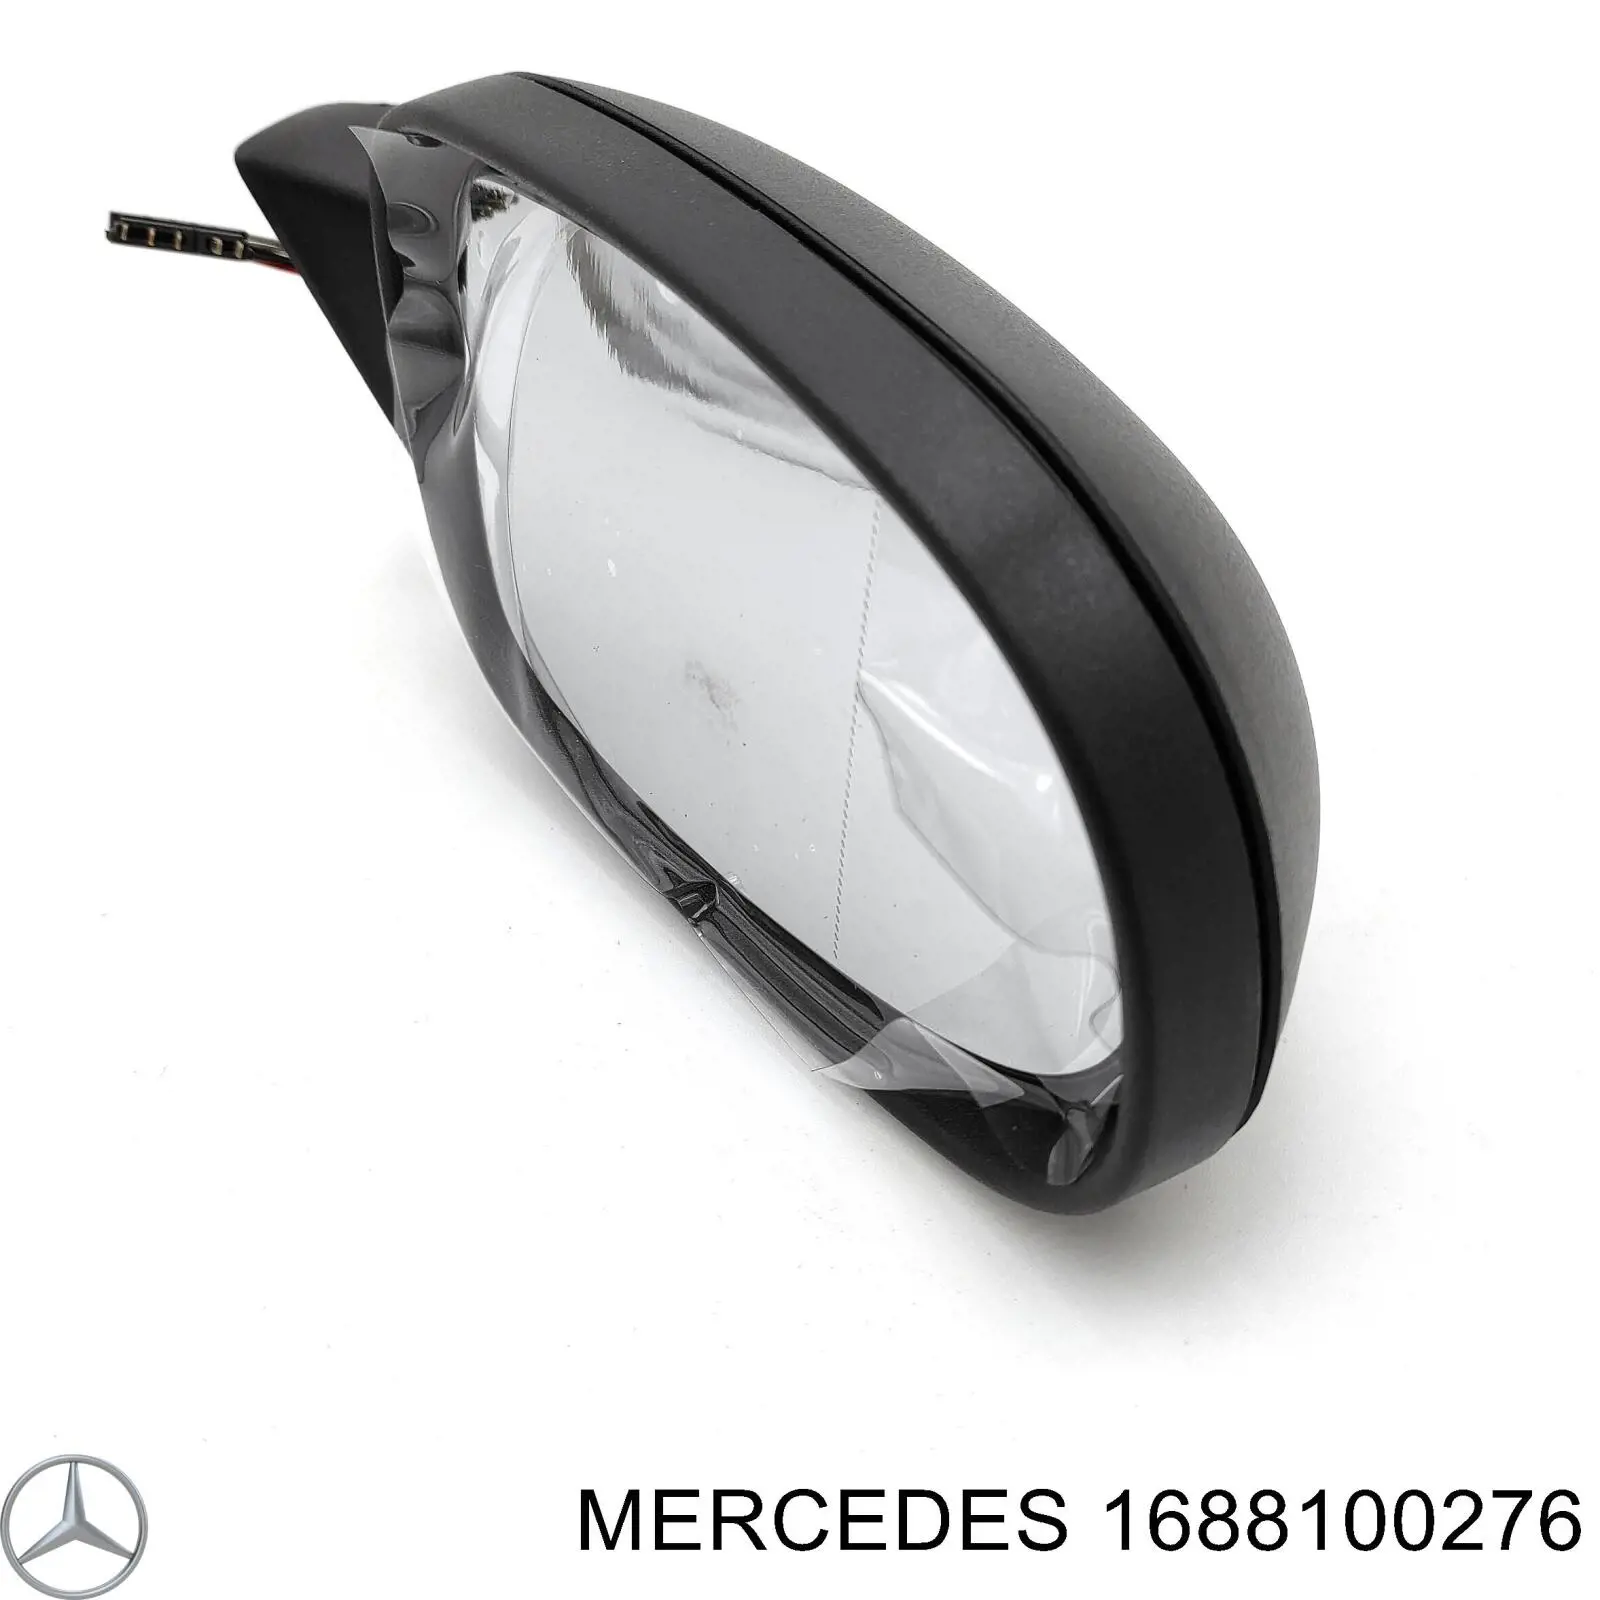 1688100276 Mercedes espejo retrovisor derecho